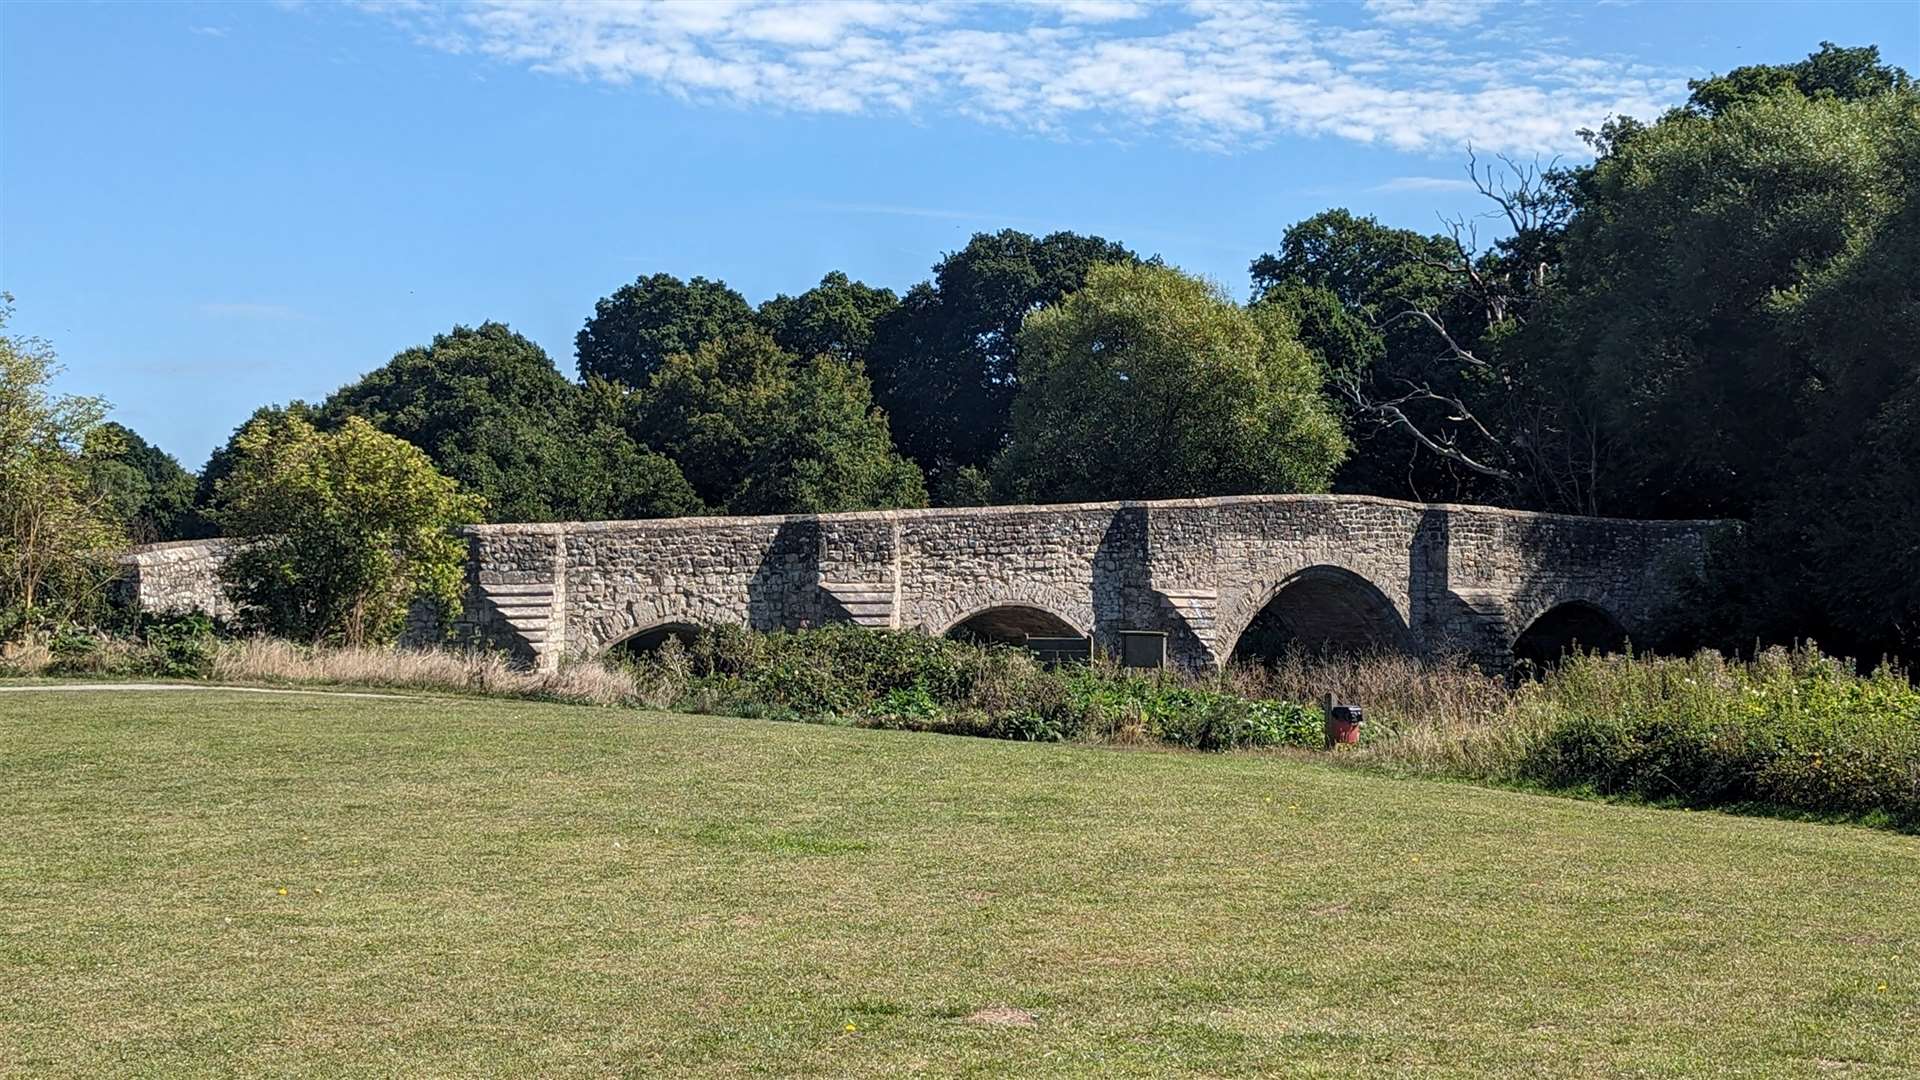 The medieval Teston Bridge